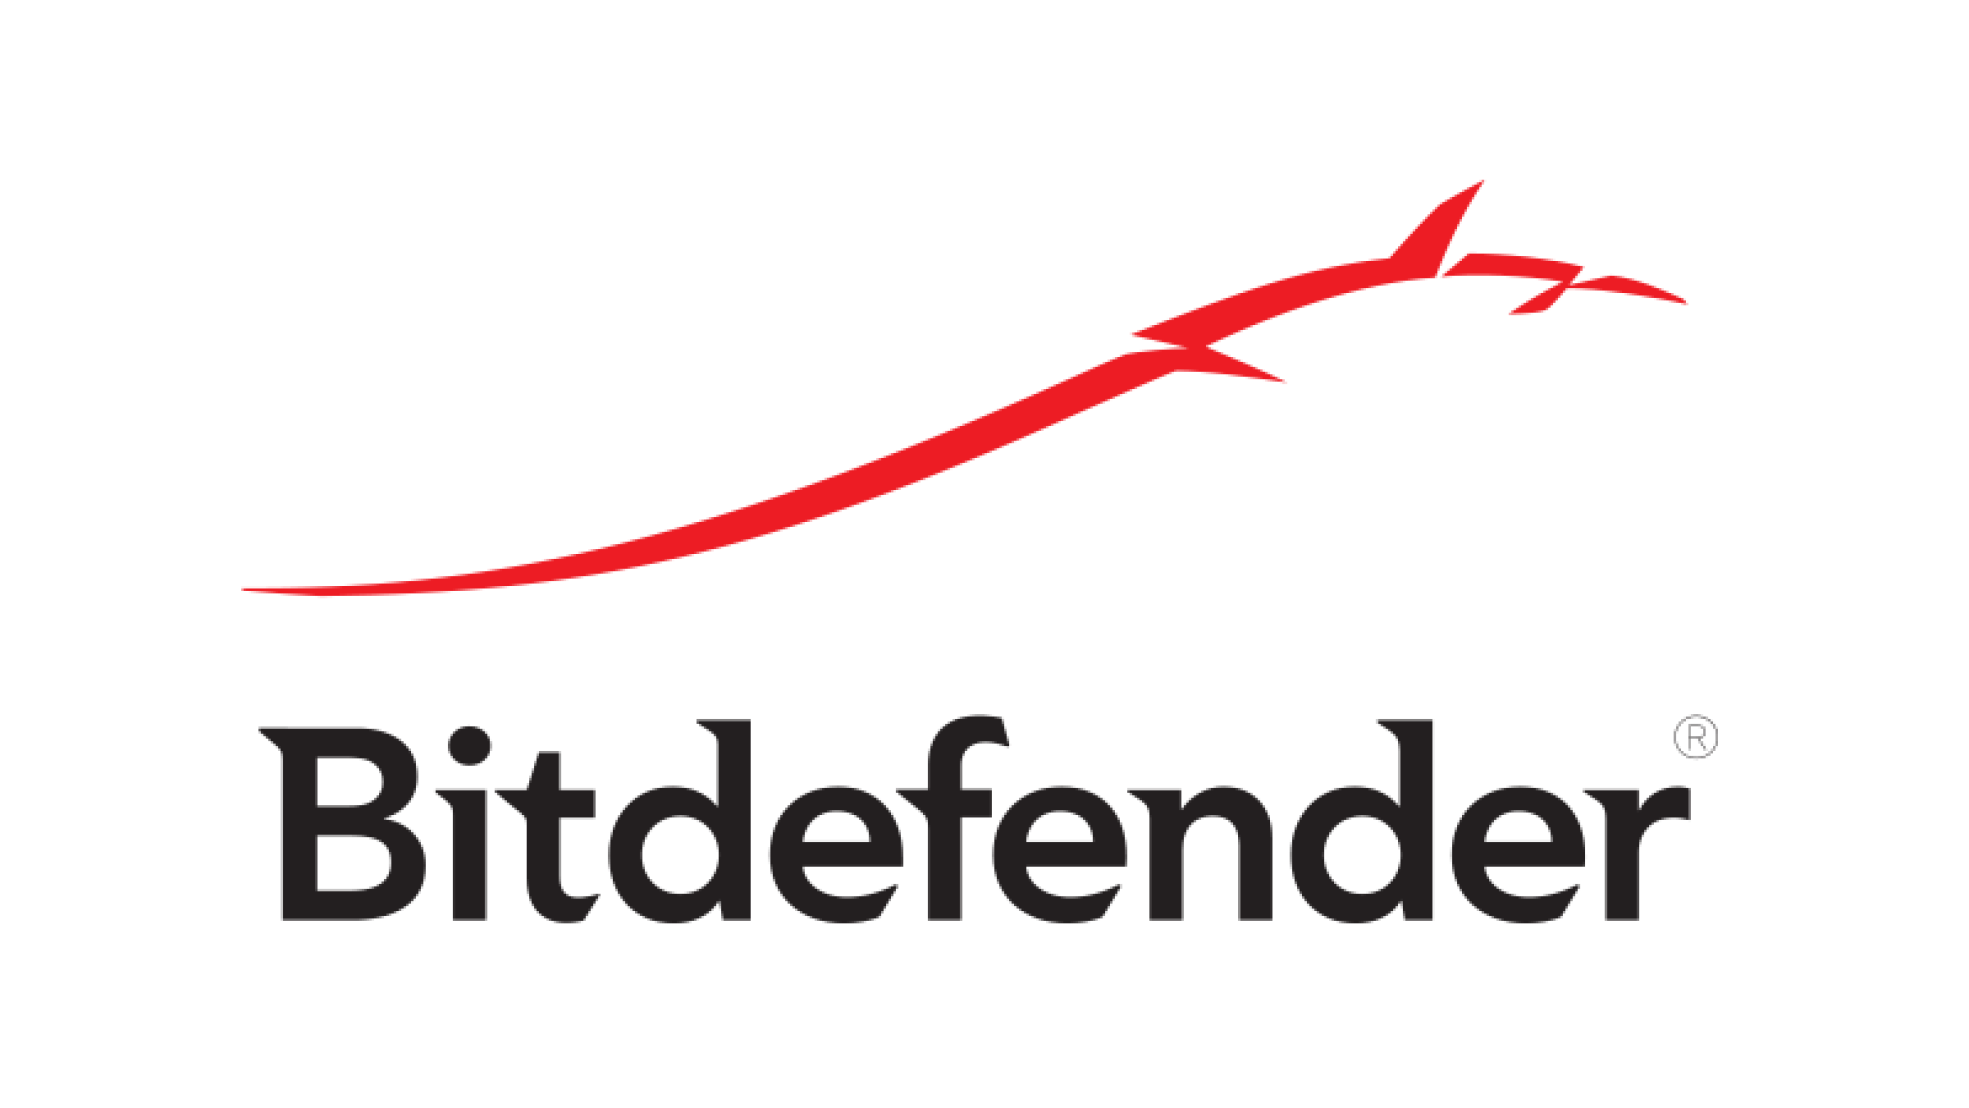 56% OFF Bitdefender Products